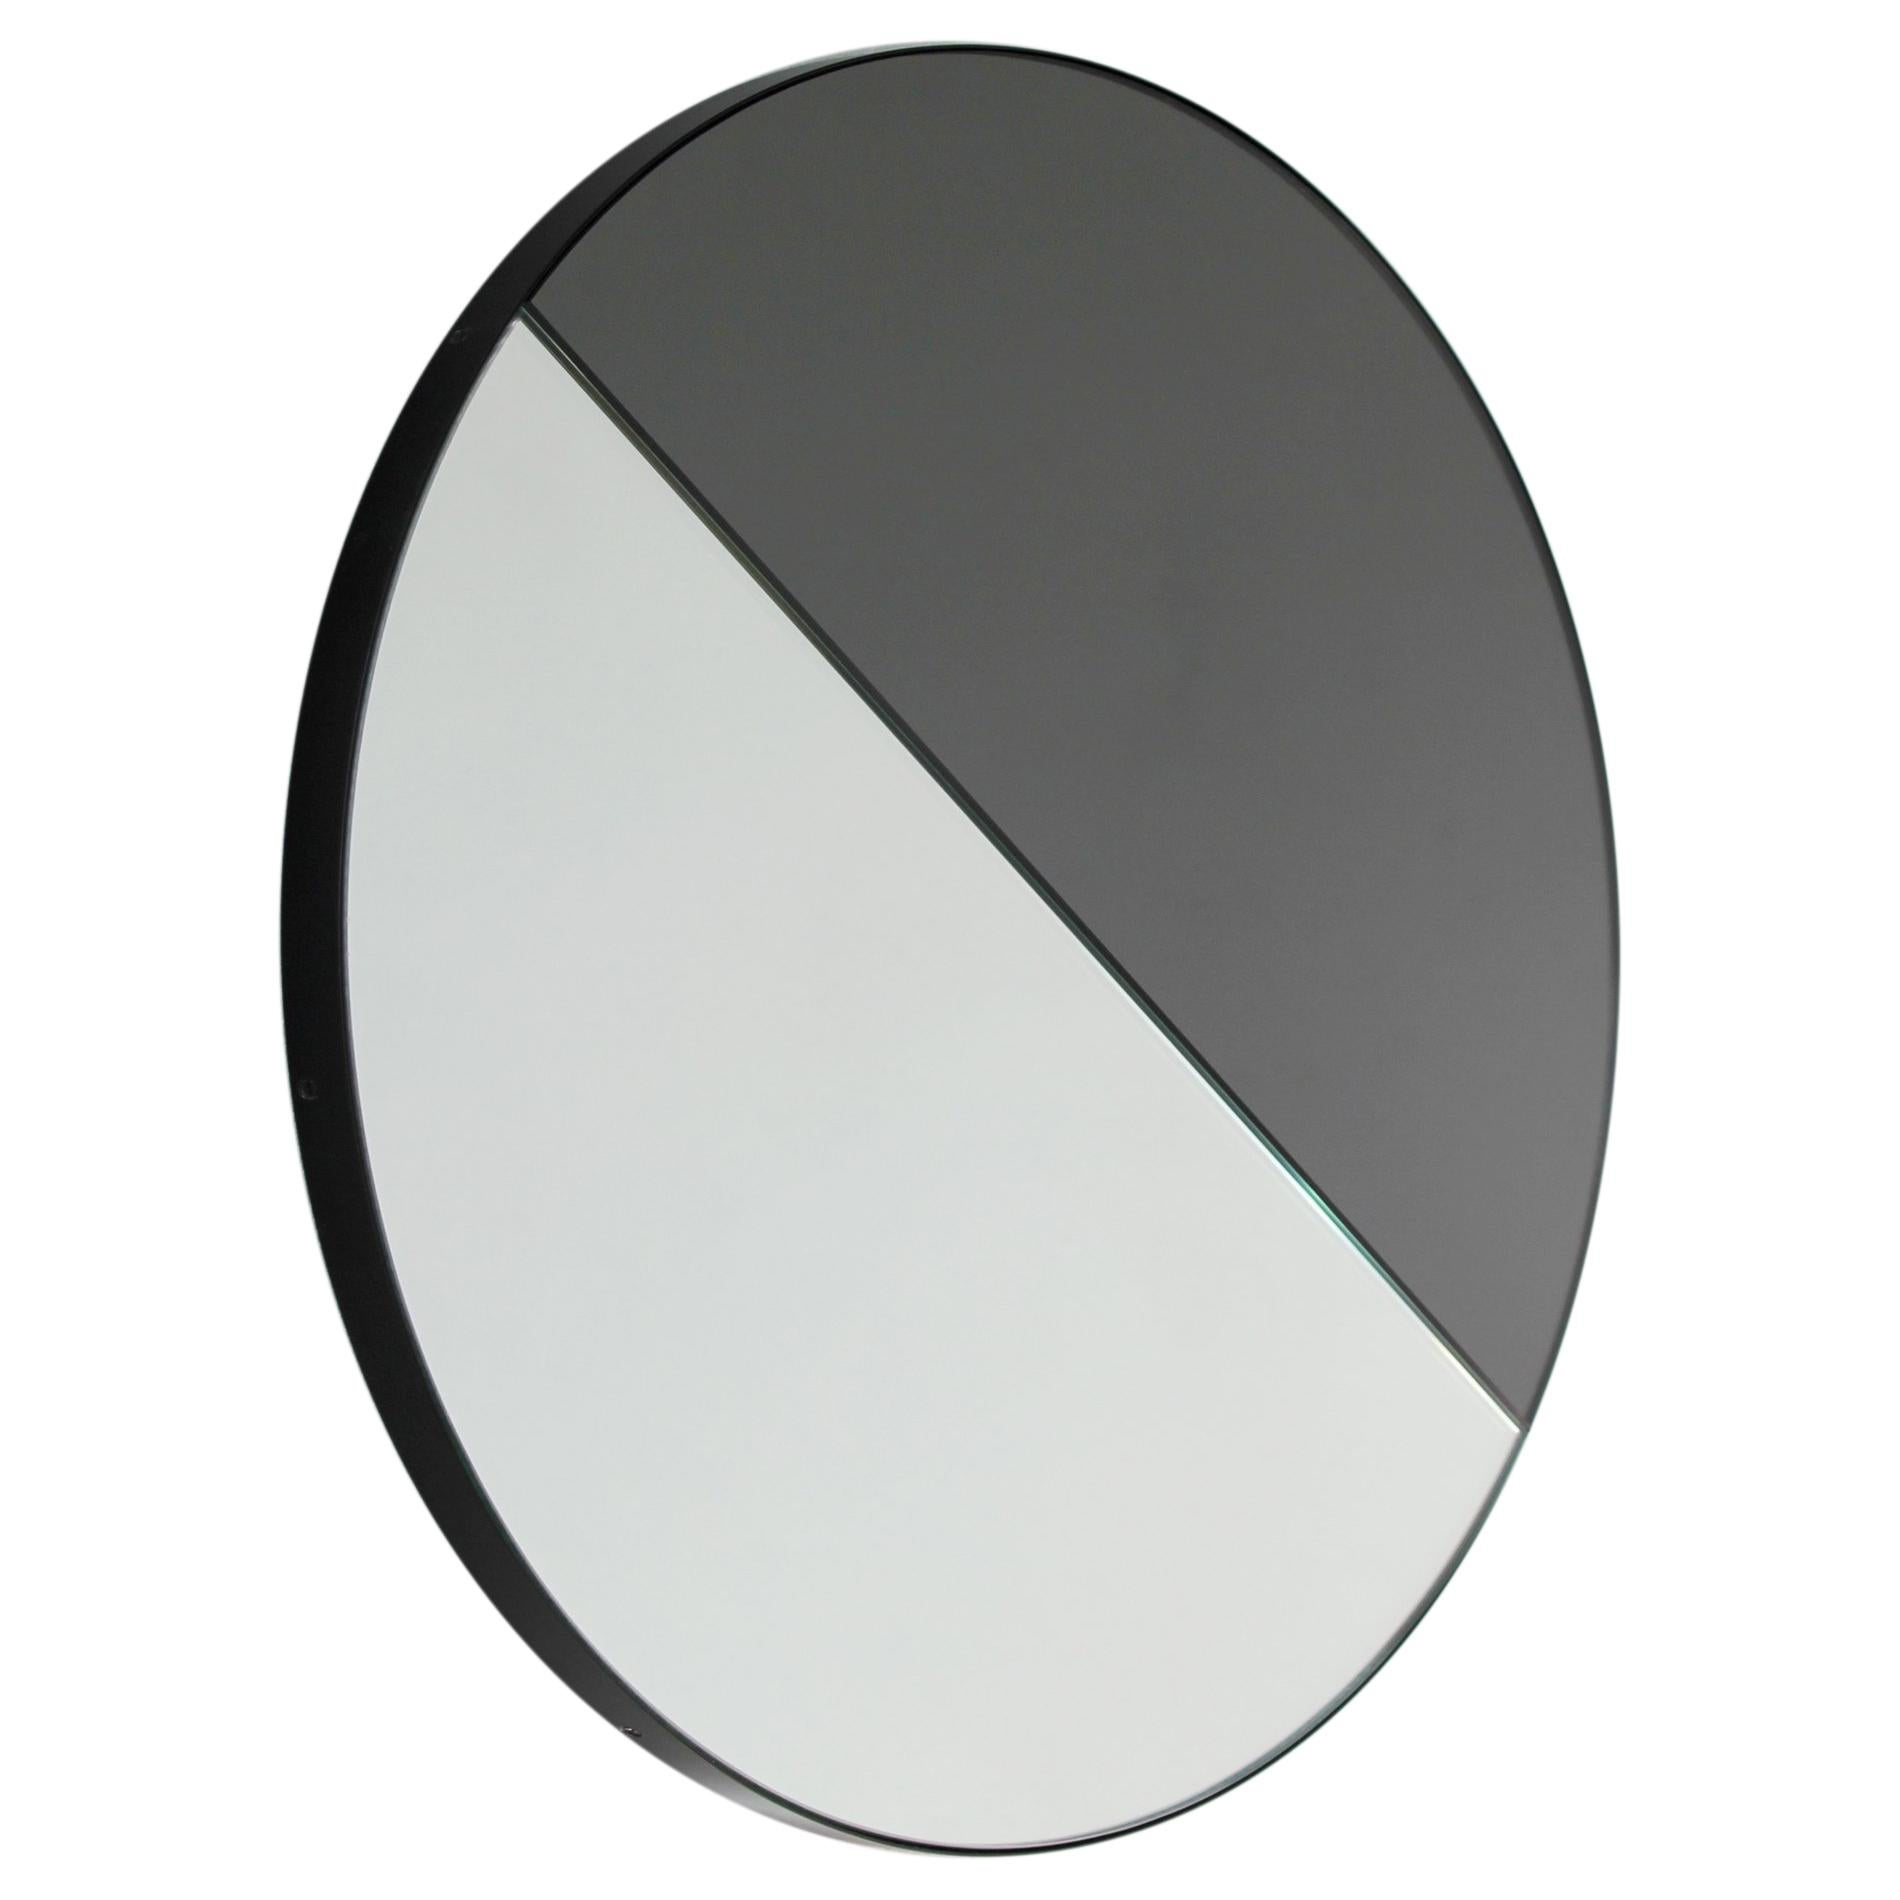 Orbis Dualis Mixed Tint Contemporary Round Mirror with Black Frame, XL